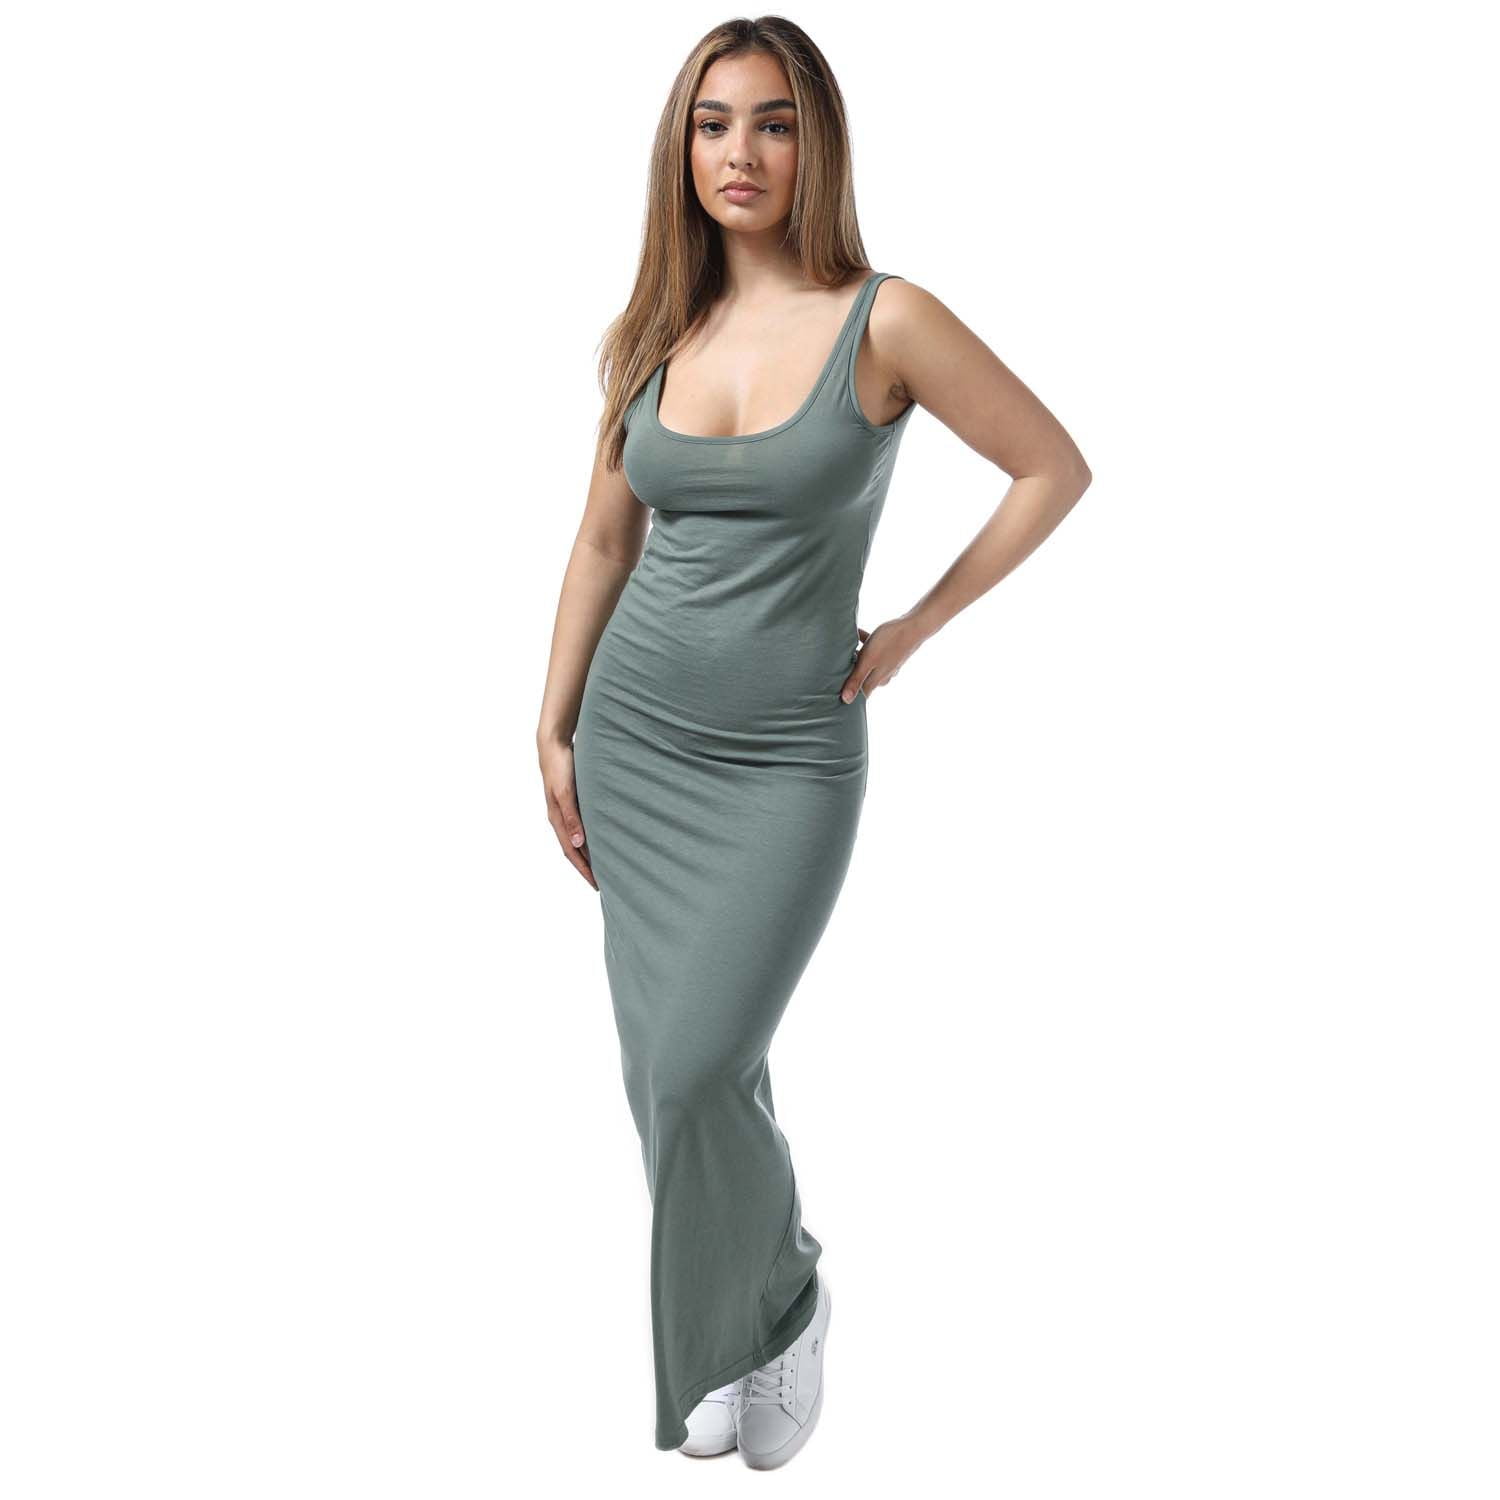 Twisted coping millimeter Women's Vero Moda Nanna Maxi Dress in Green - Walmart.com